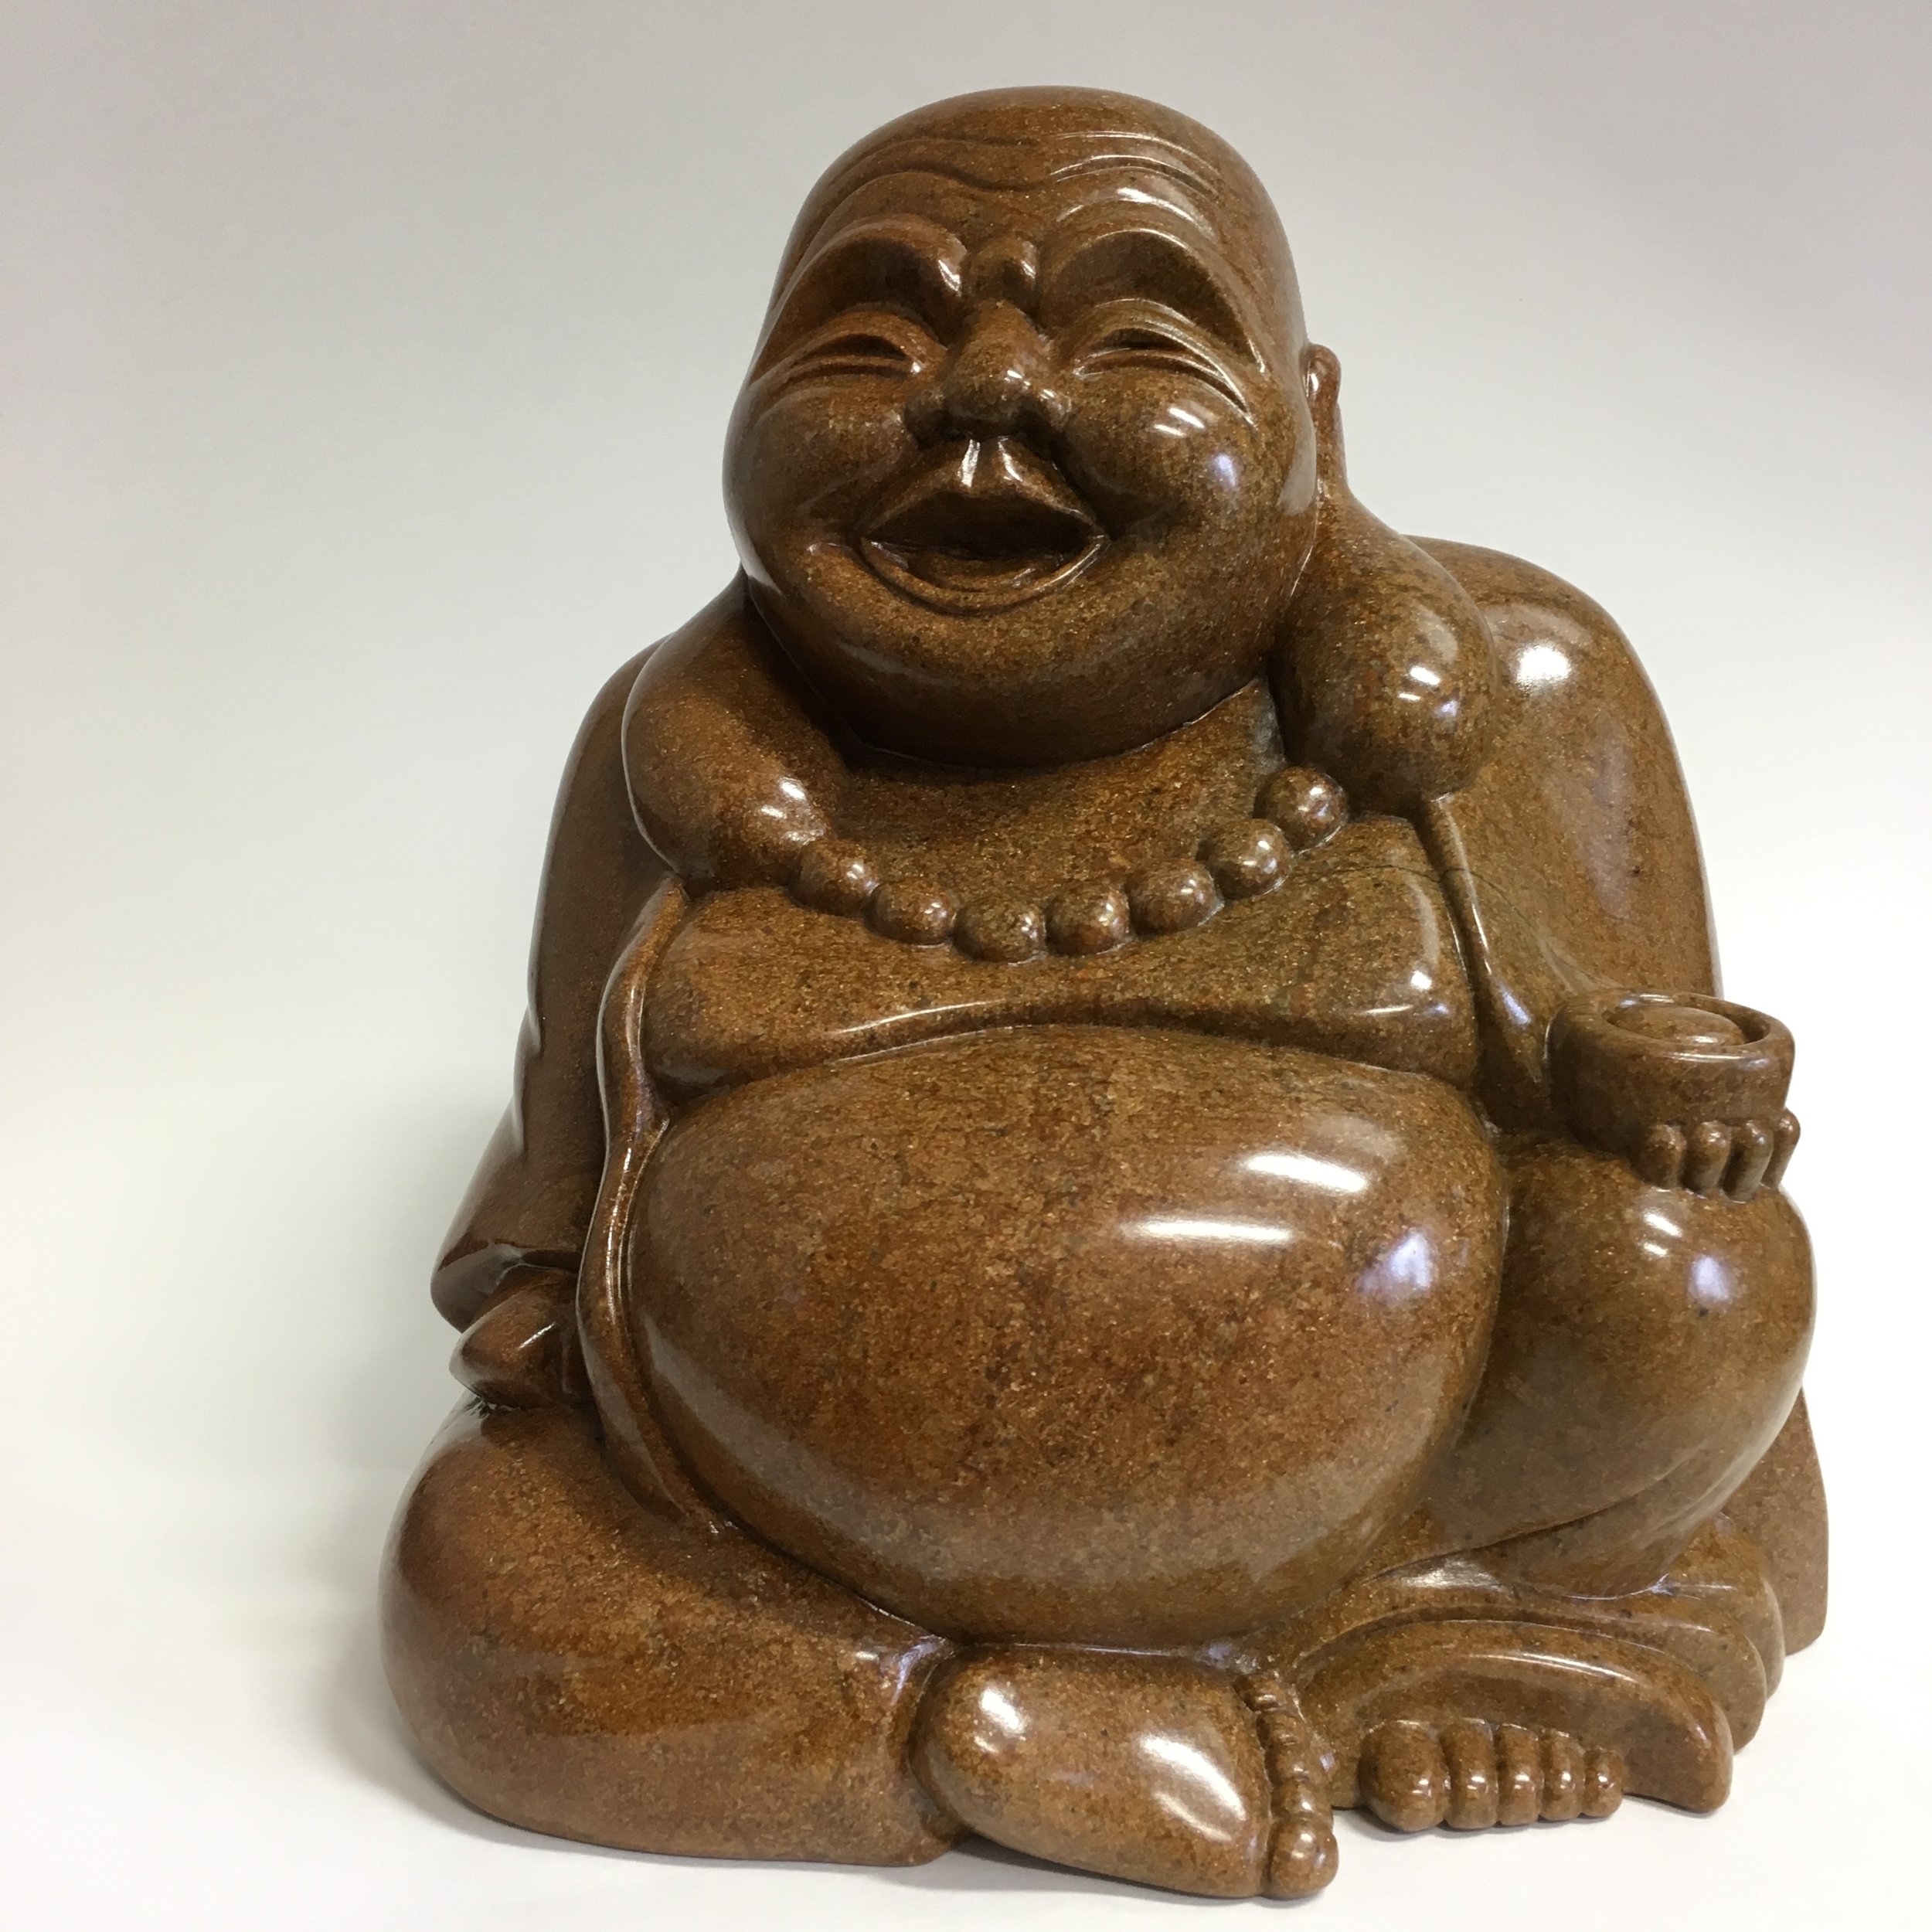 Commissioned Piece "Buddha"